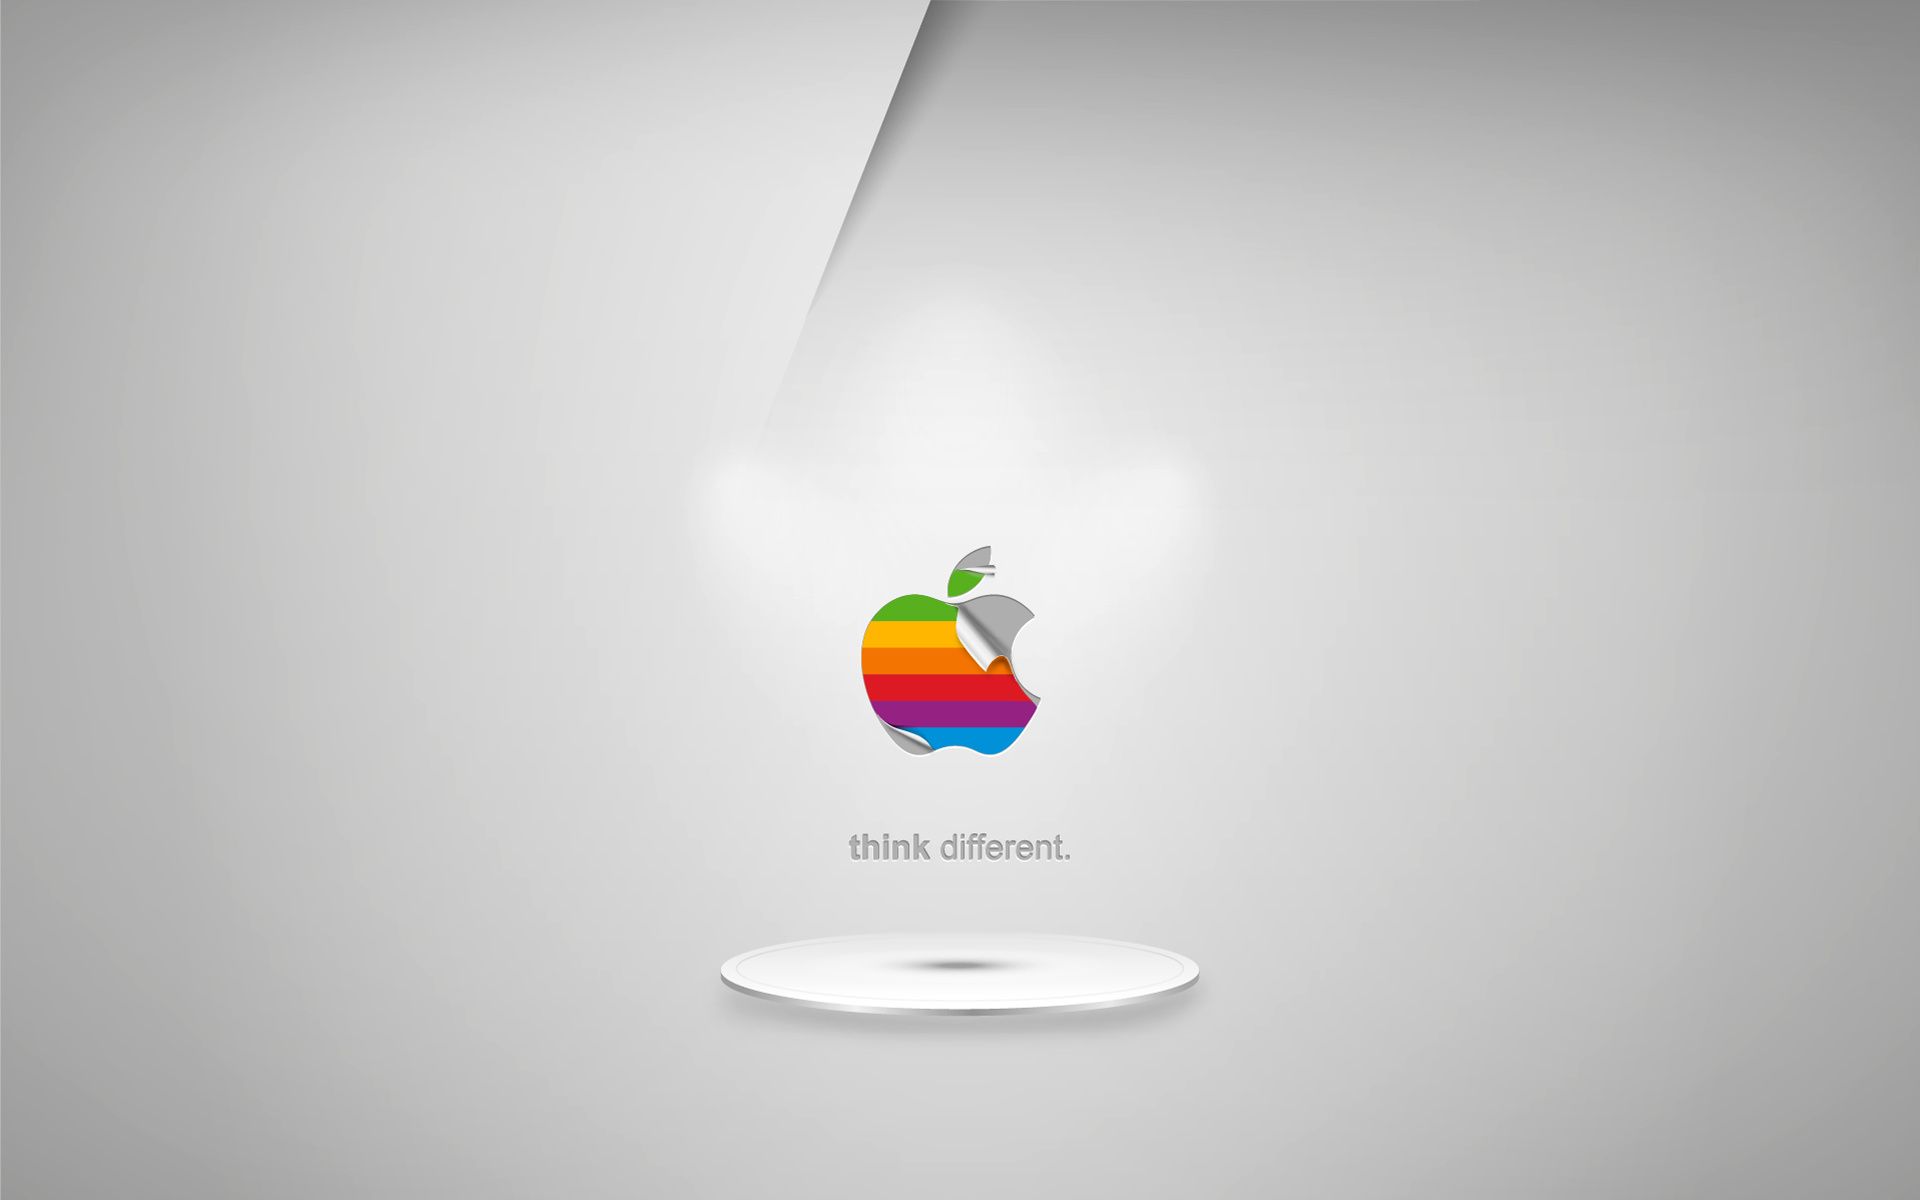 Wallpaper apple, think different, ipad, emblem, brand name, iphone